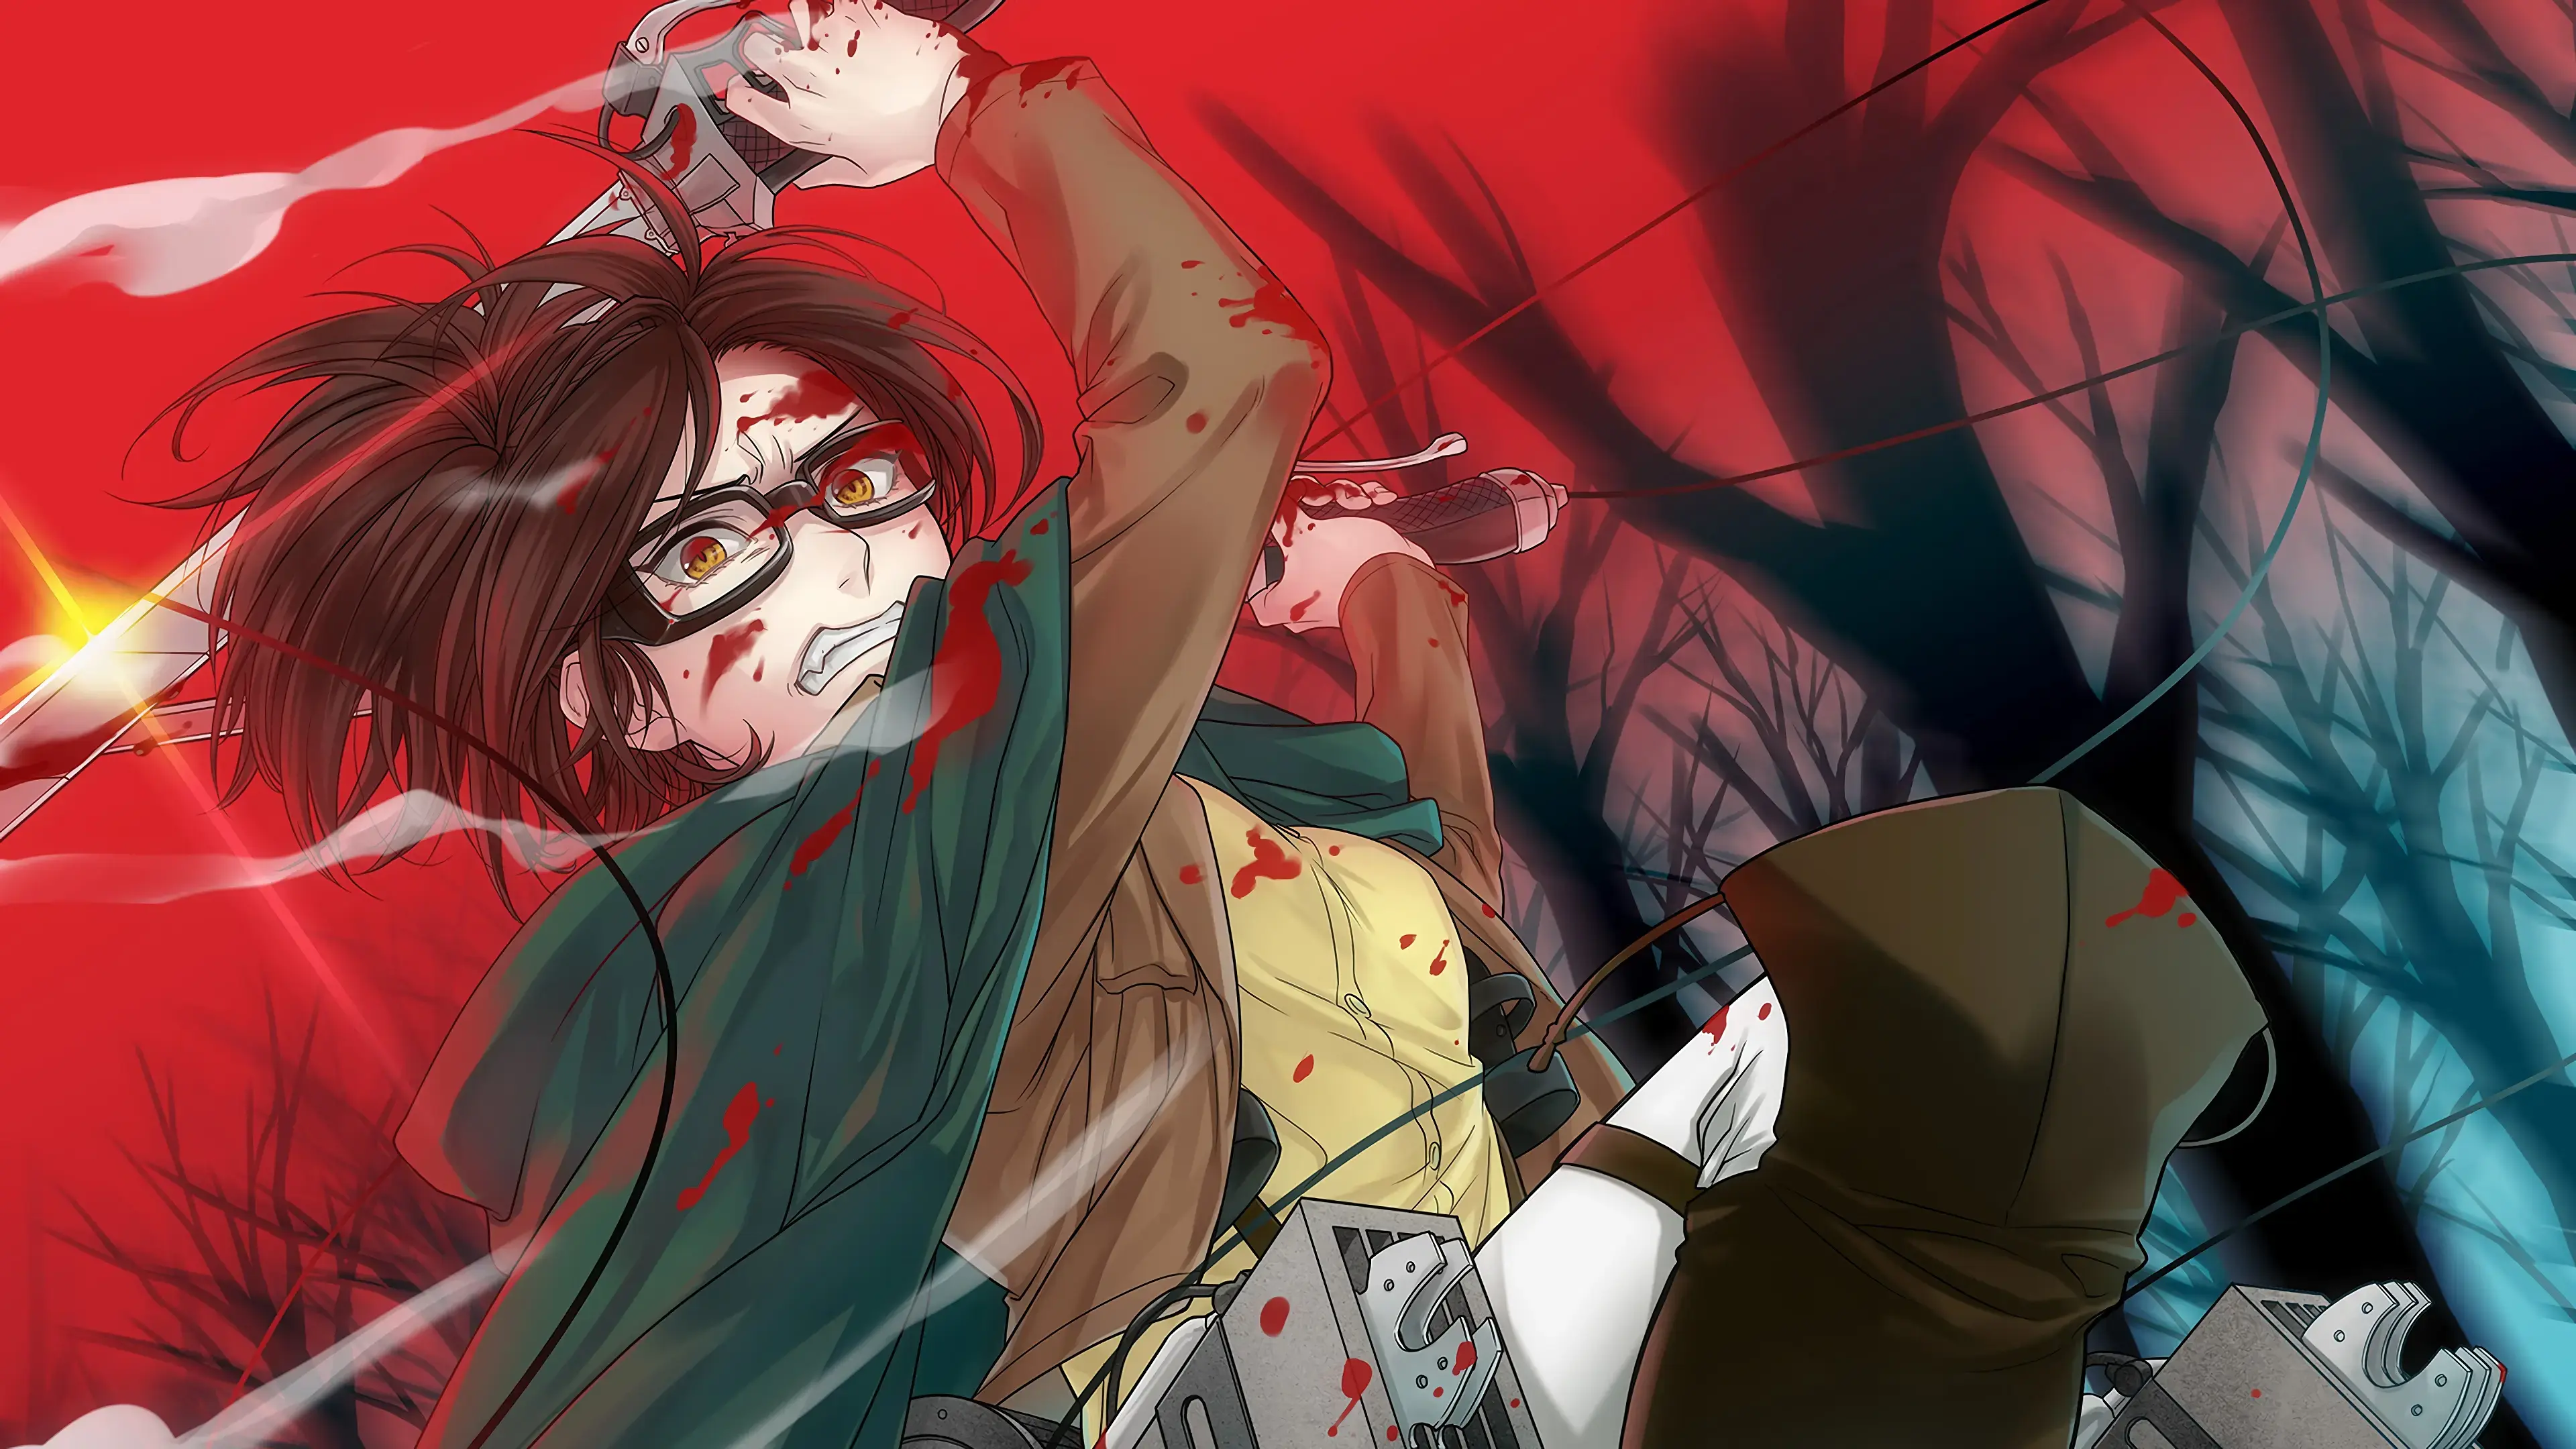 Anime Attack on Titan Season 3 background 24 | Background Image